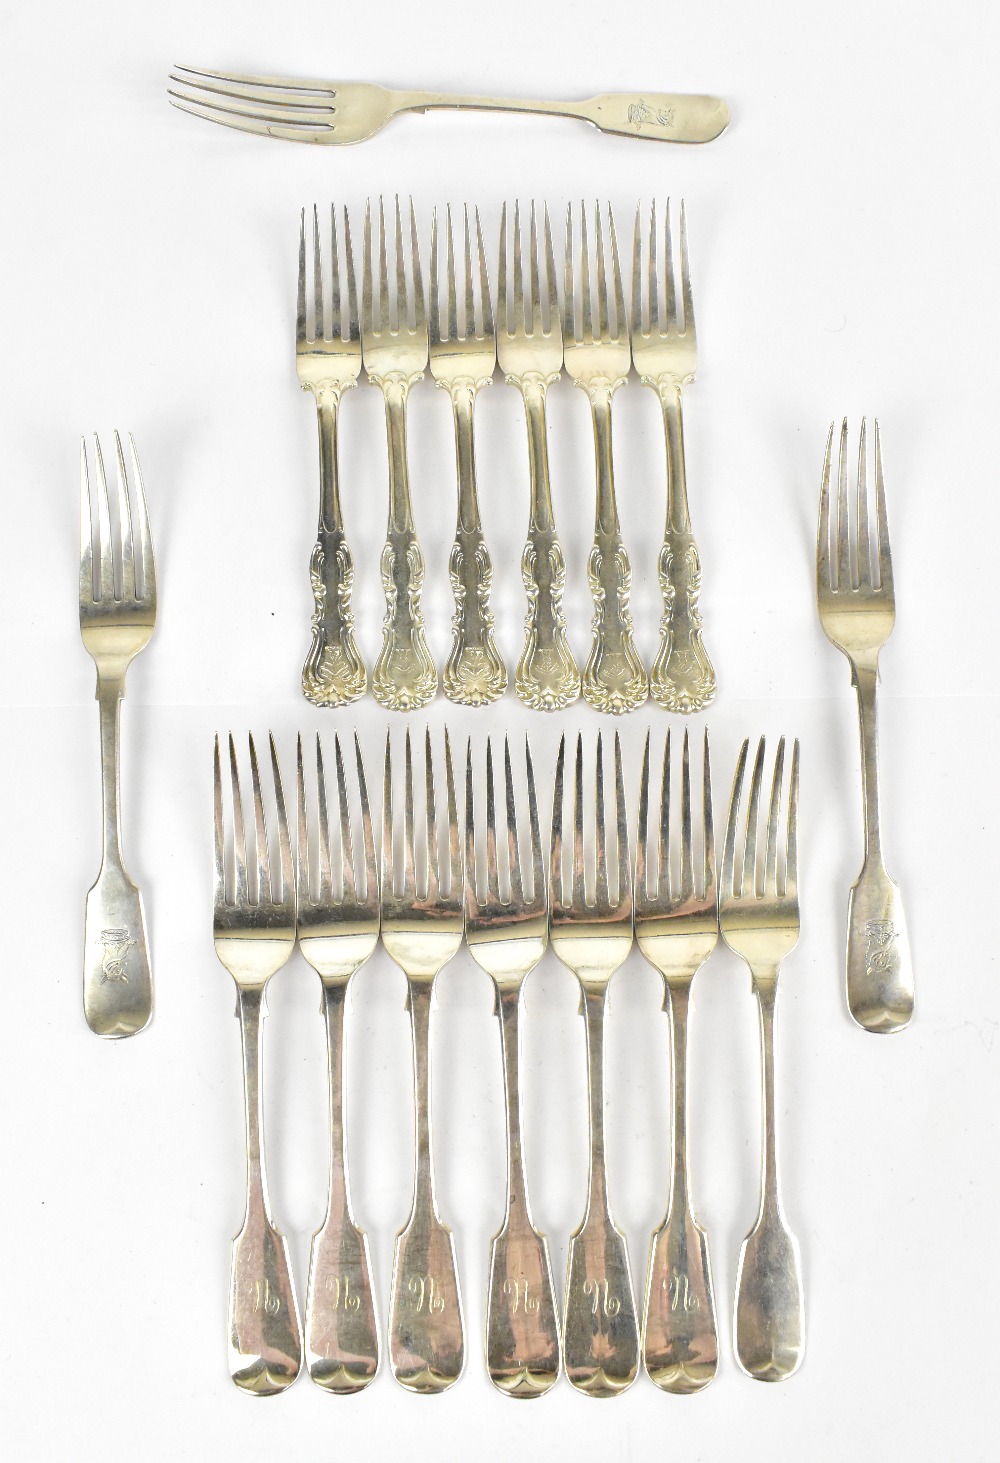 HUNT & ROSKELL LTD; a set of six Edward VII hallmarked silver forks, 17cm, London 1908, three